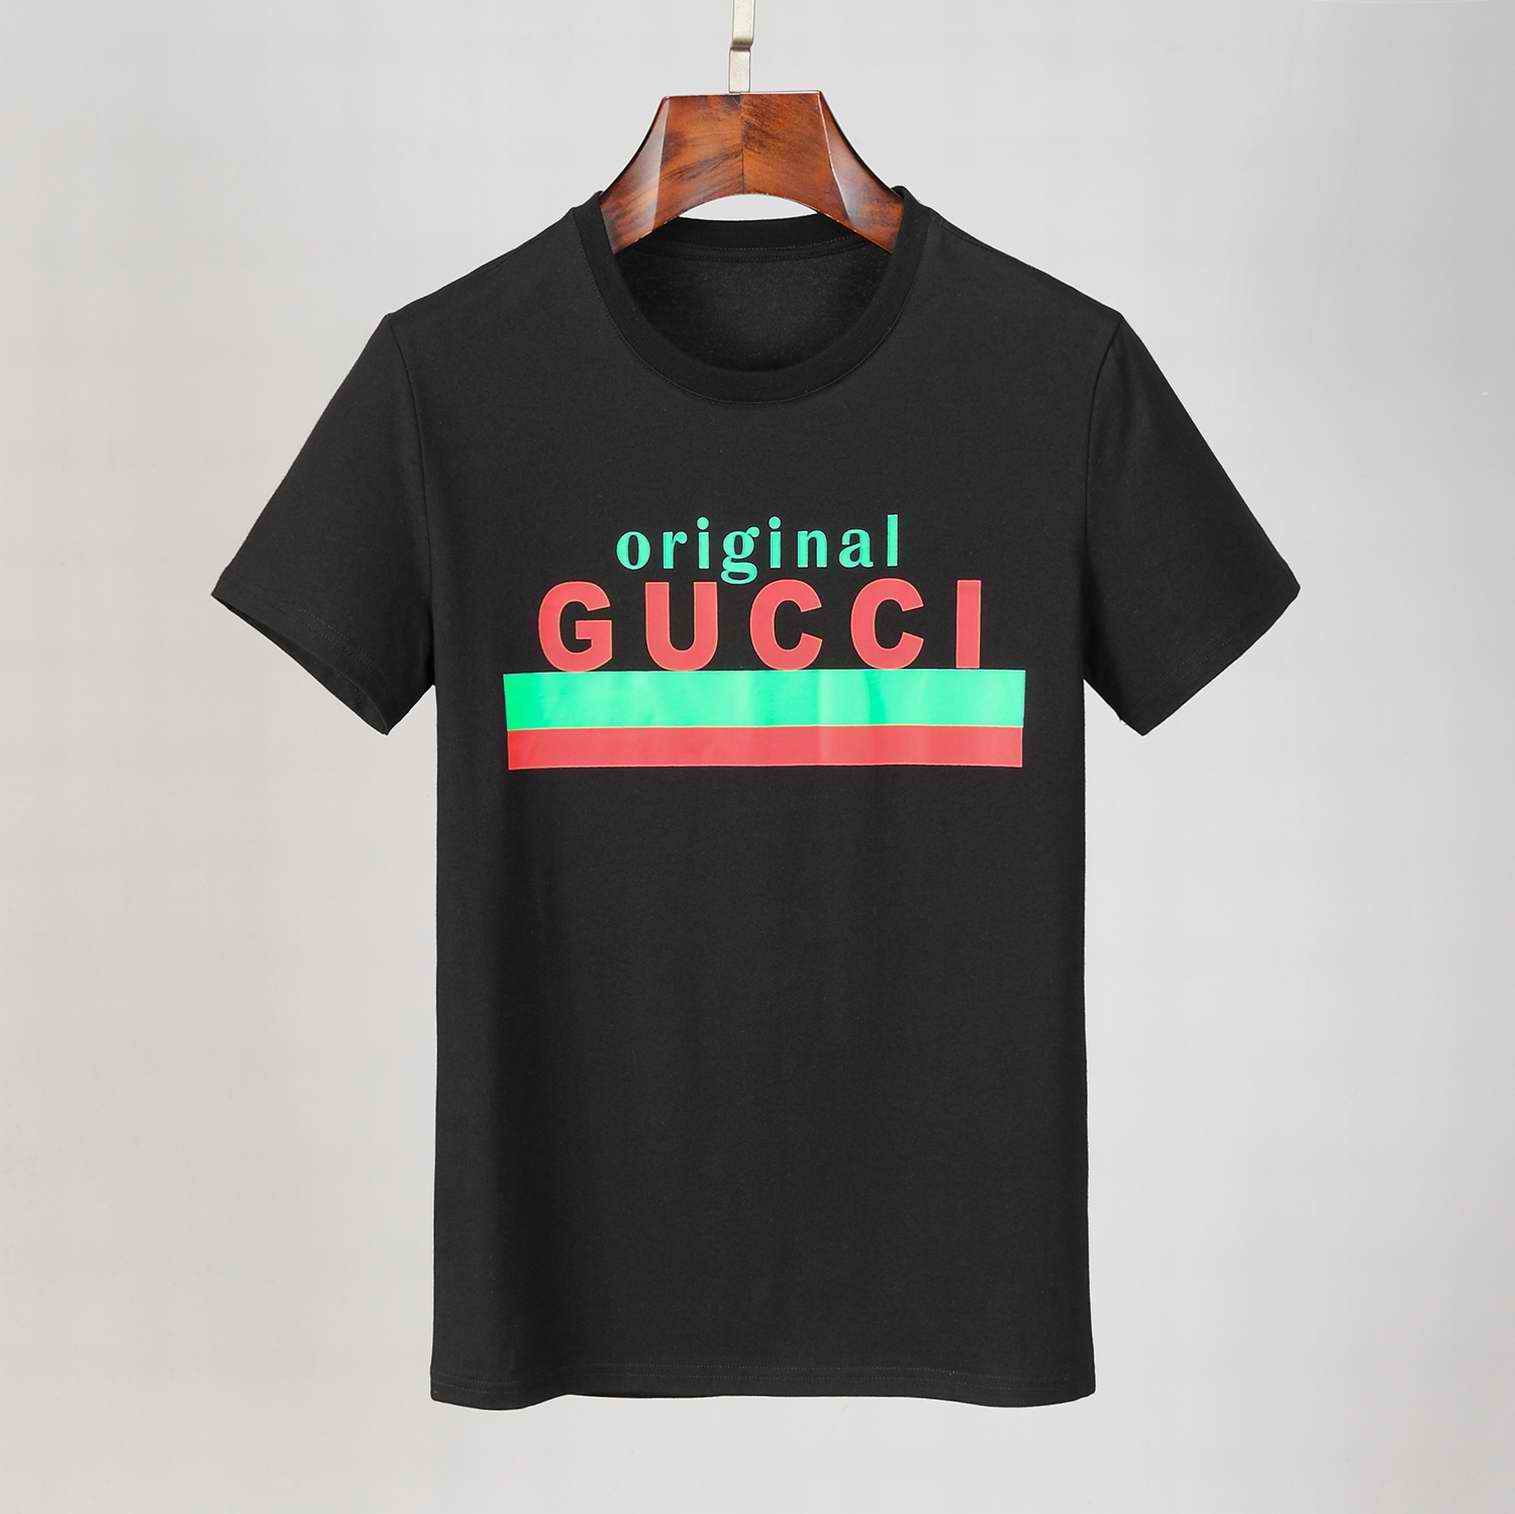  Gucci Shirts 007